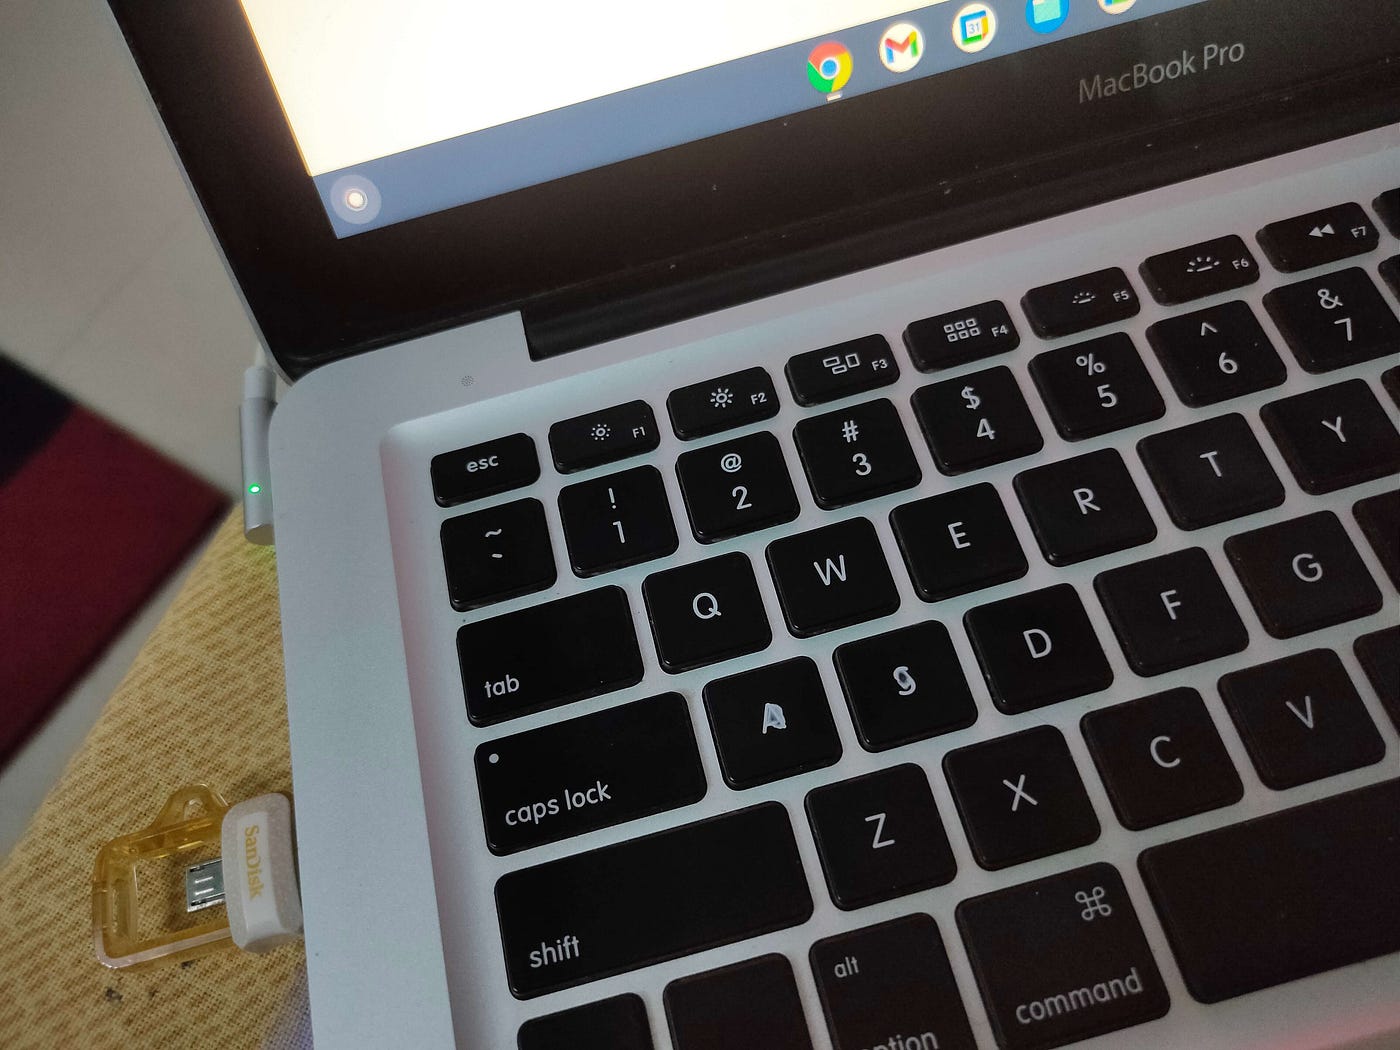 ChromeOS Flex running on MacBook Pro through bootable USB drive